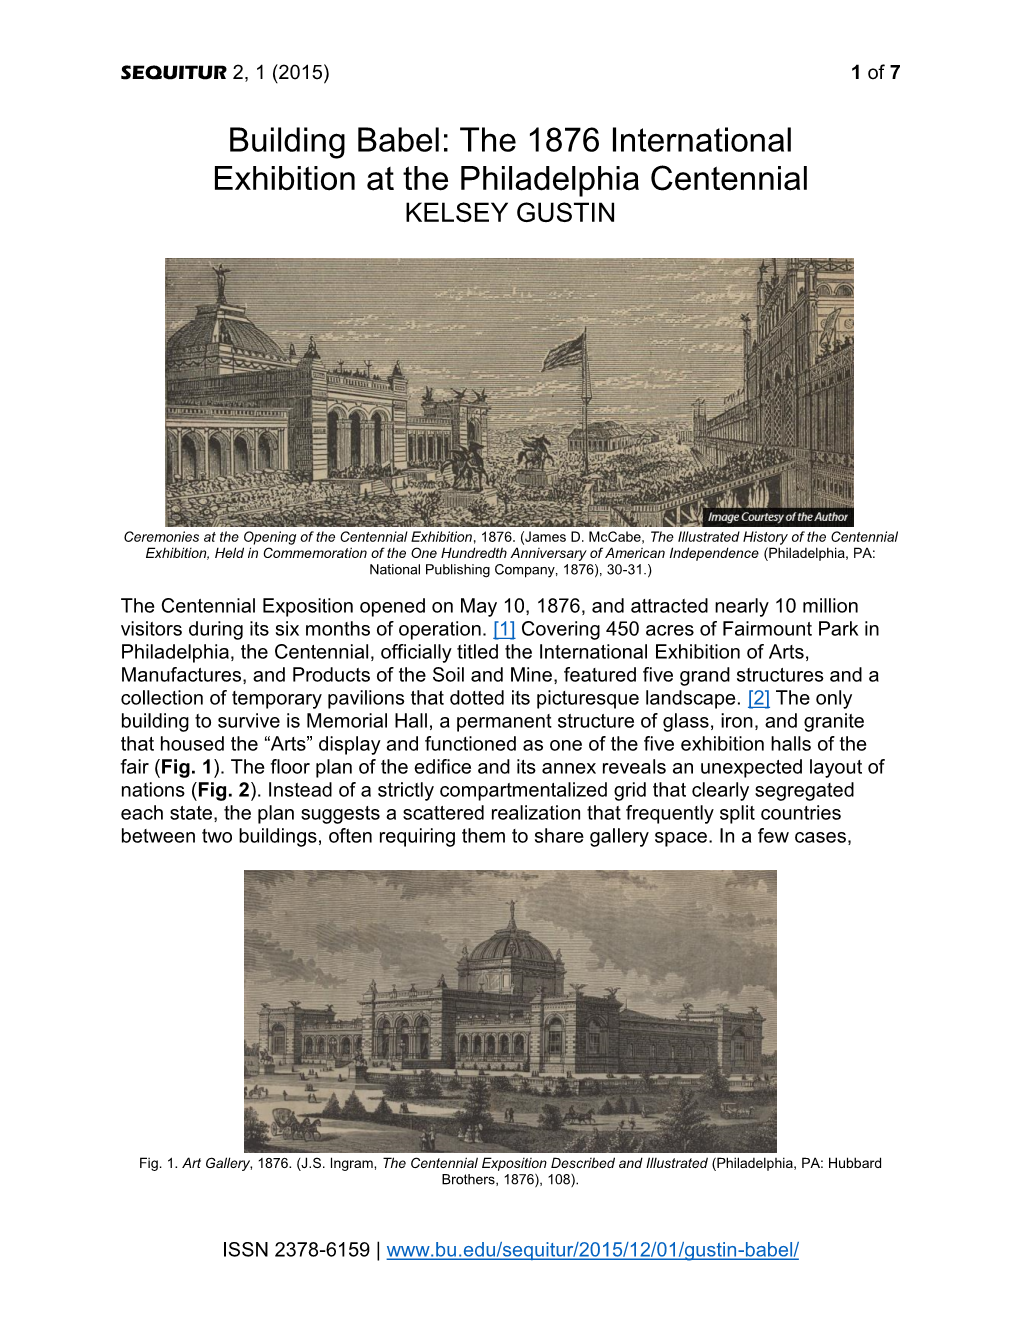 Building Babel: the 1876 International Exhibition at the Philadelphia Centennial KELSEY GUSTIN